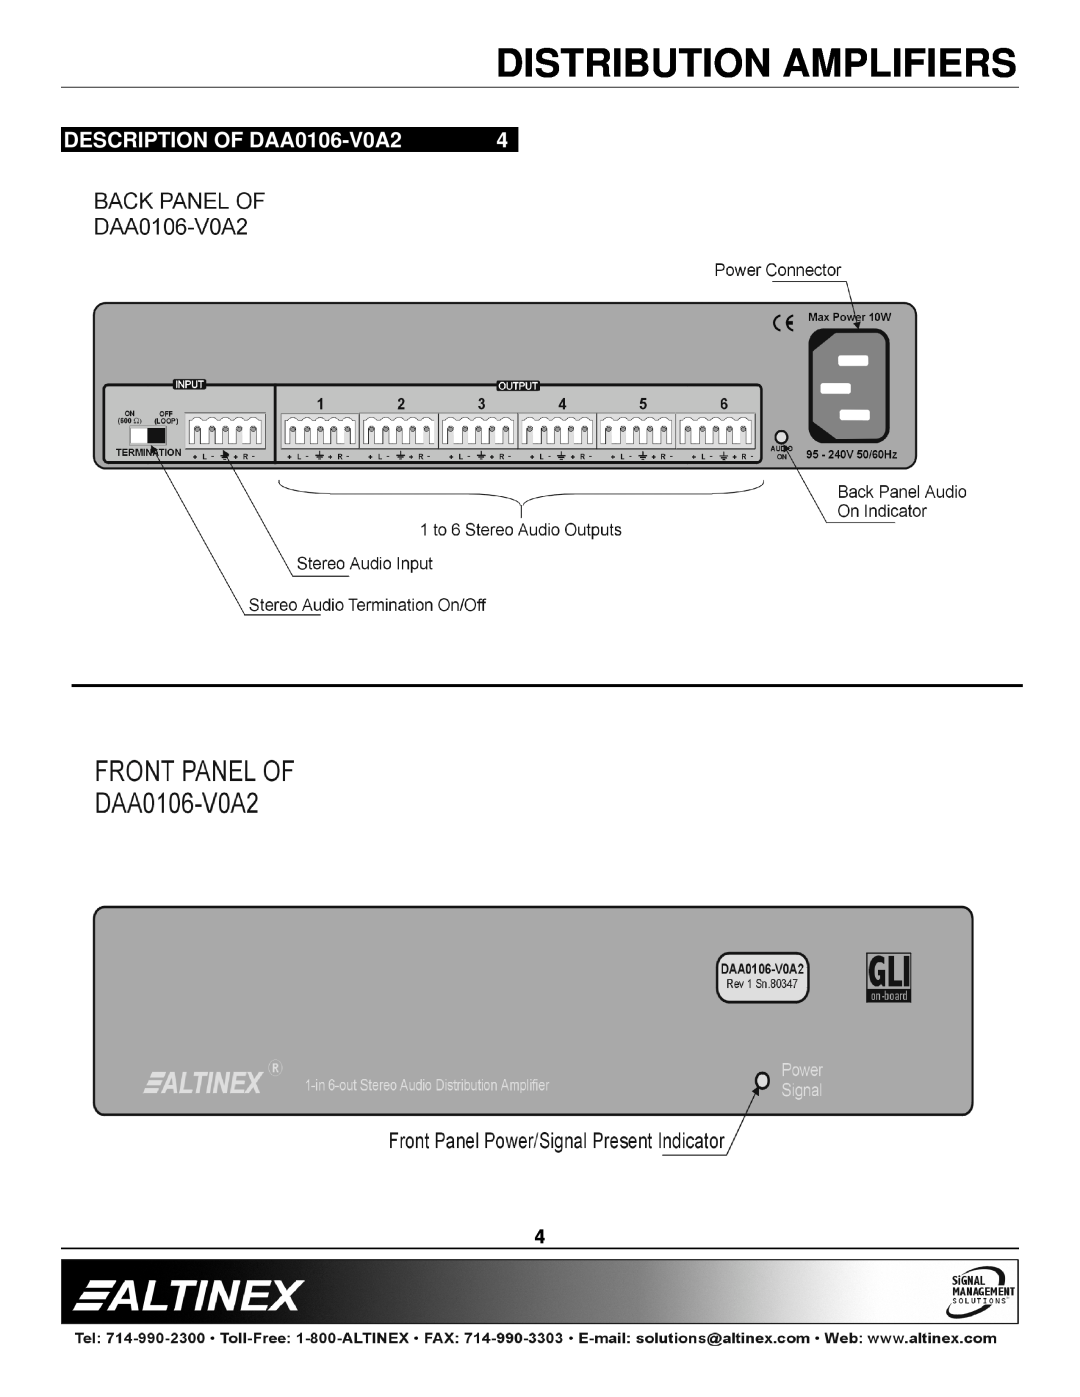 Altinex manual DESCRIPTION OF DAA0106-V0A2, Distribution Amplifiers 